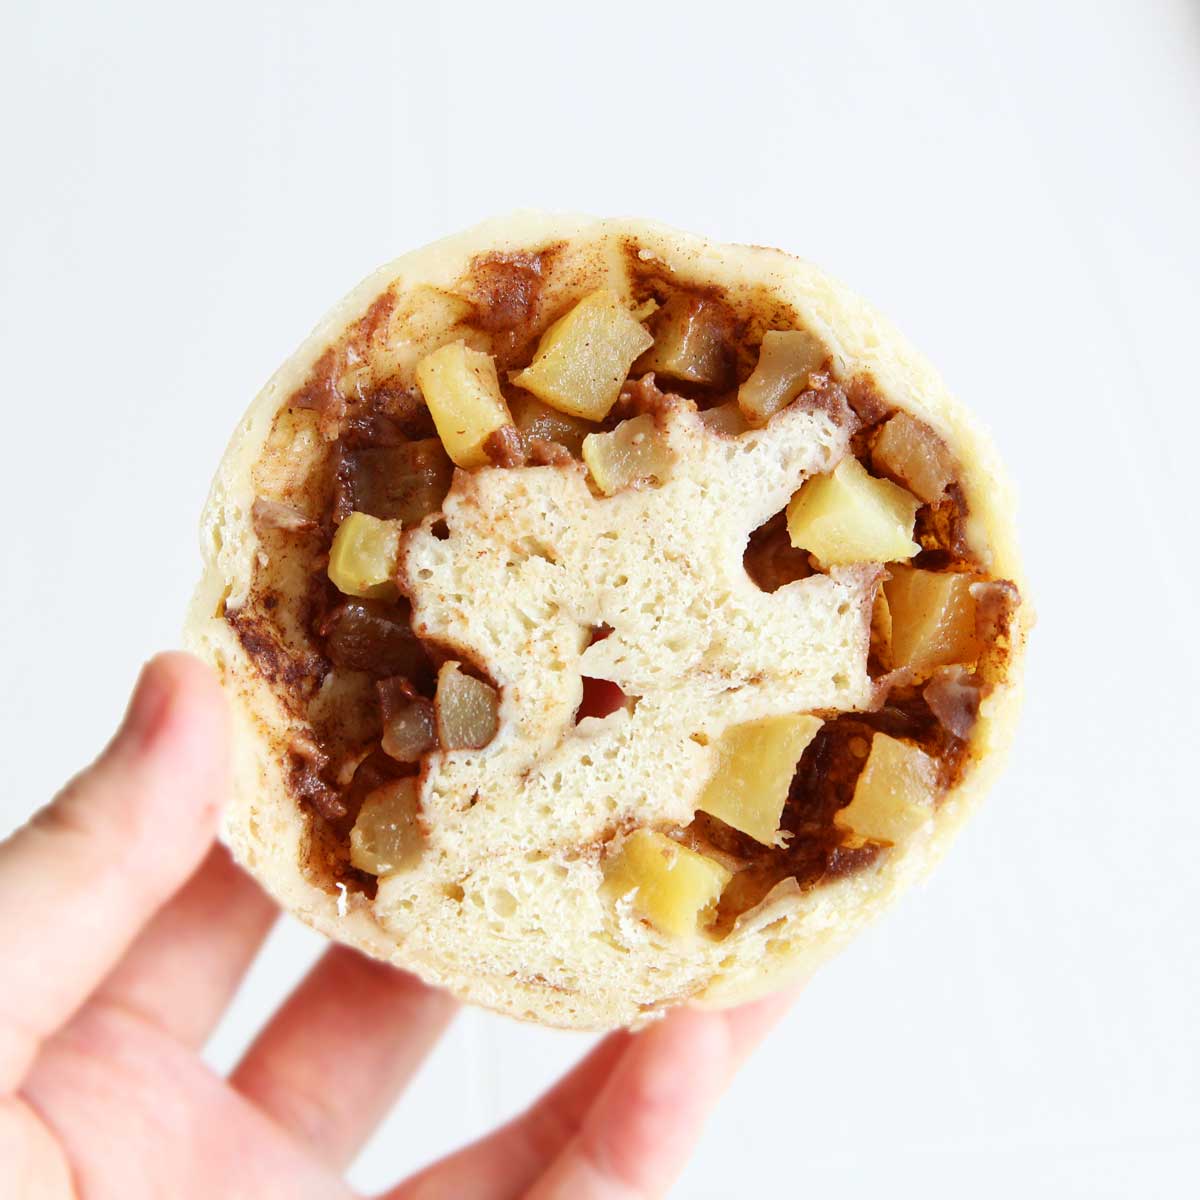 Vegan Apple Pie Stuffed Bagels (A Healthier, Fat-Free Recipe) - Nutella Stuffed Banana